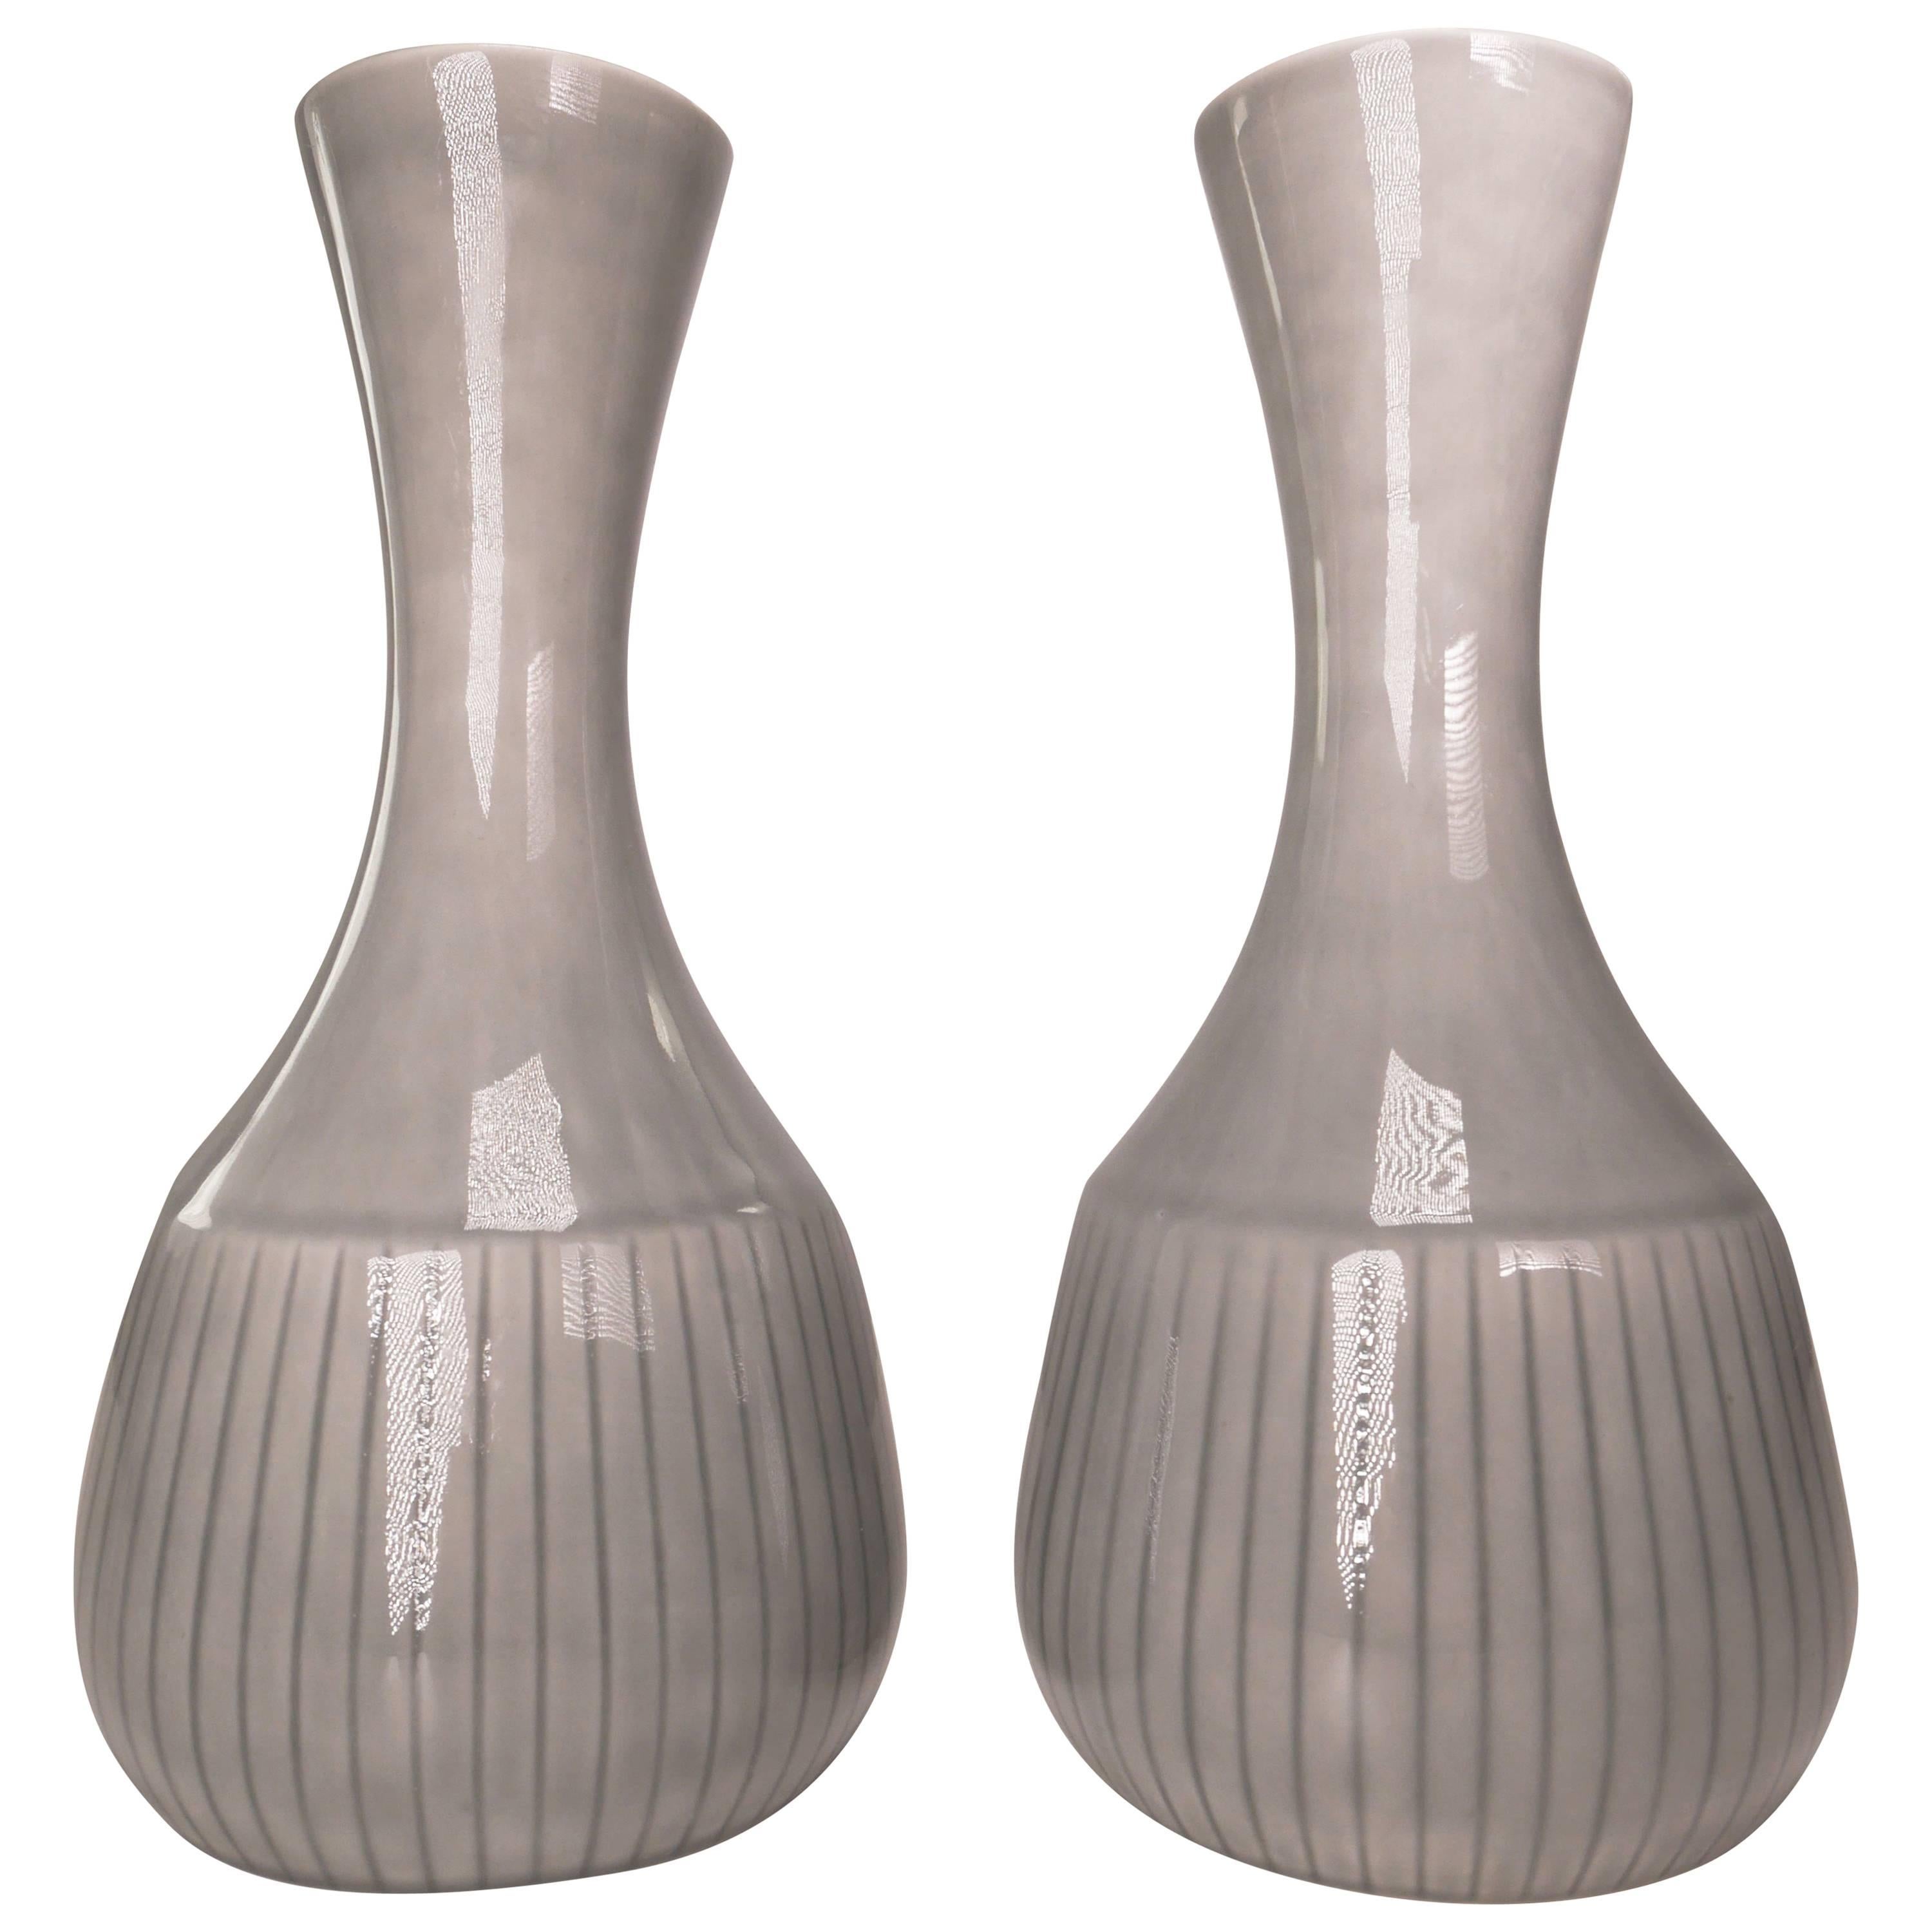 Gunnar Nylund für Rörstrand 1950s Modernist Gray Striped Vases